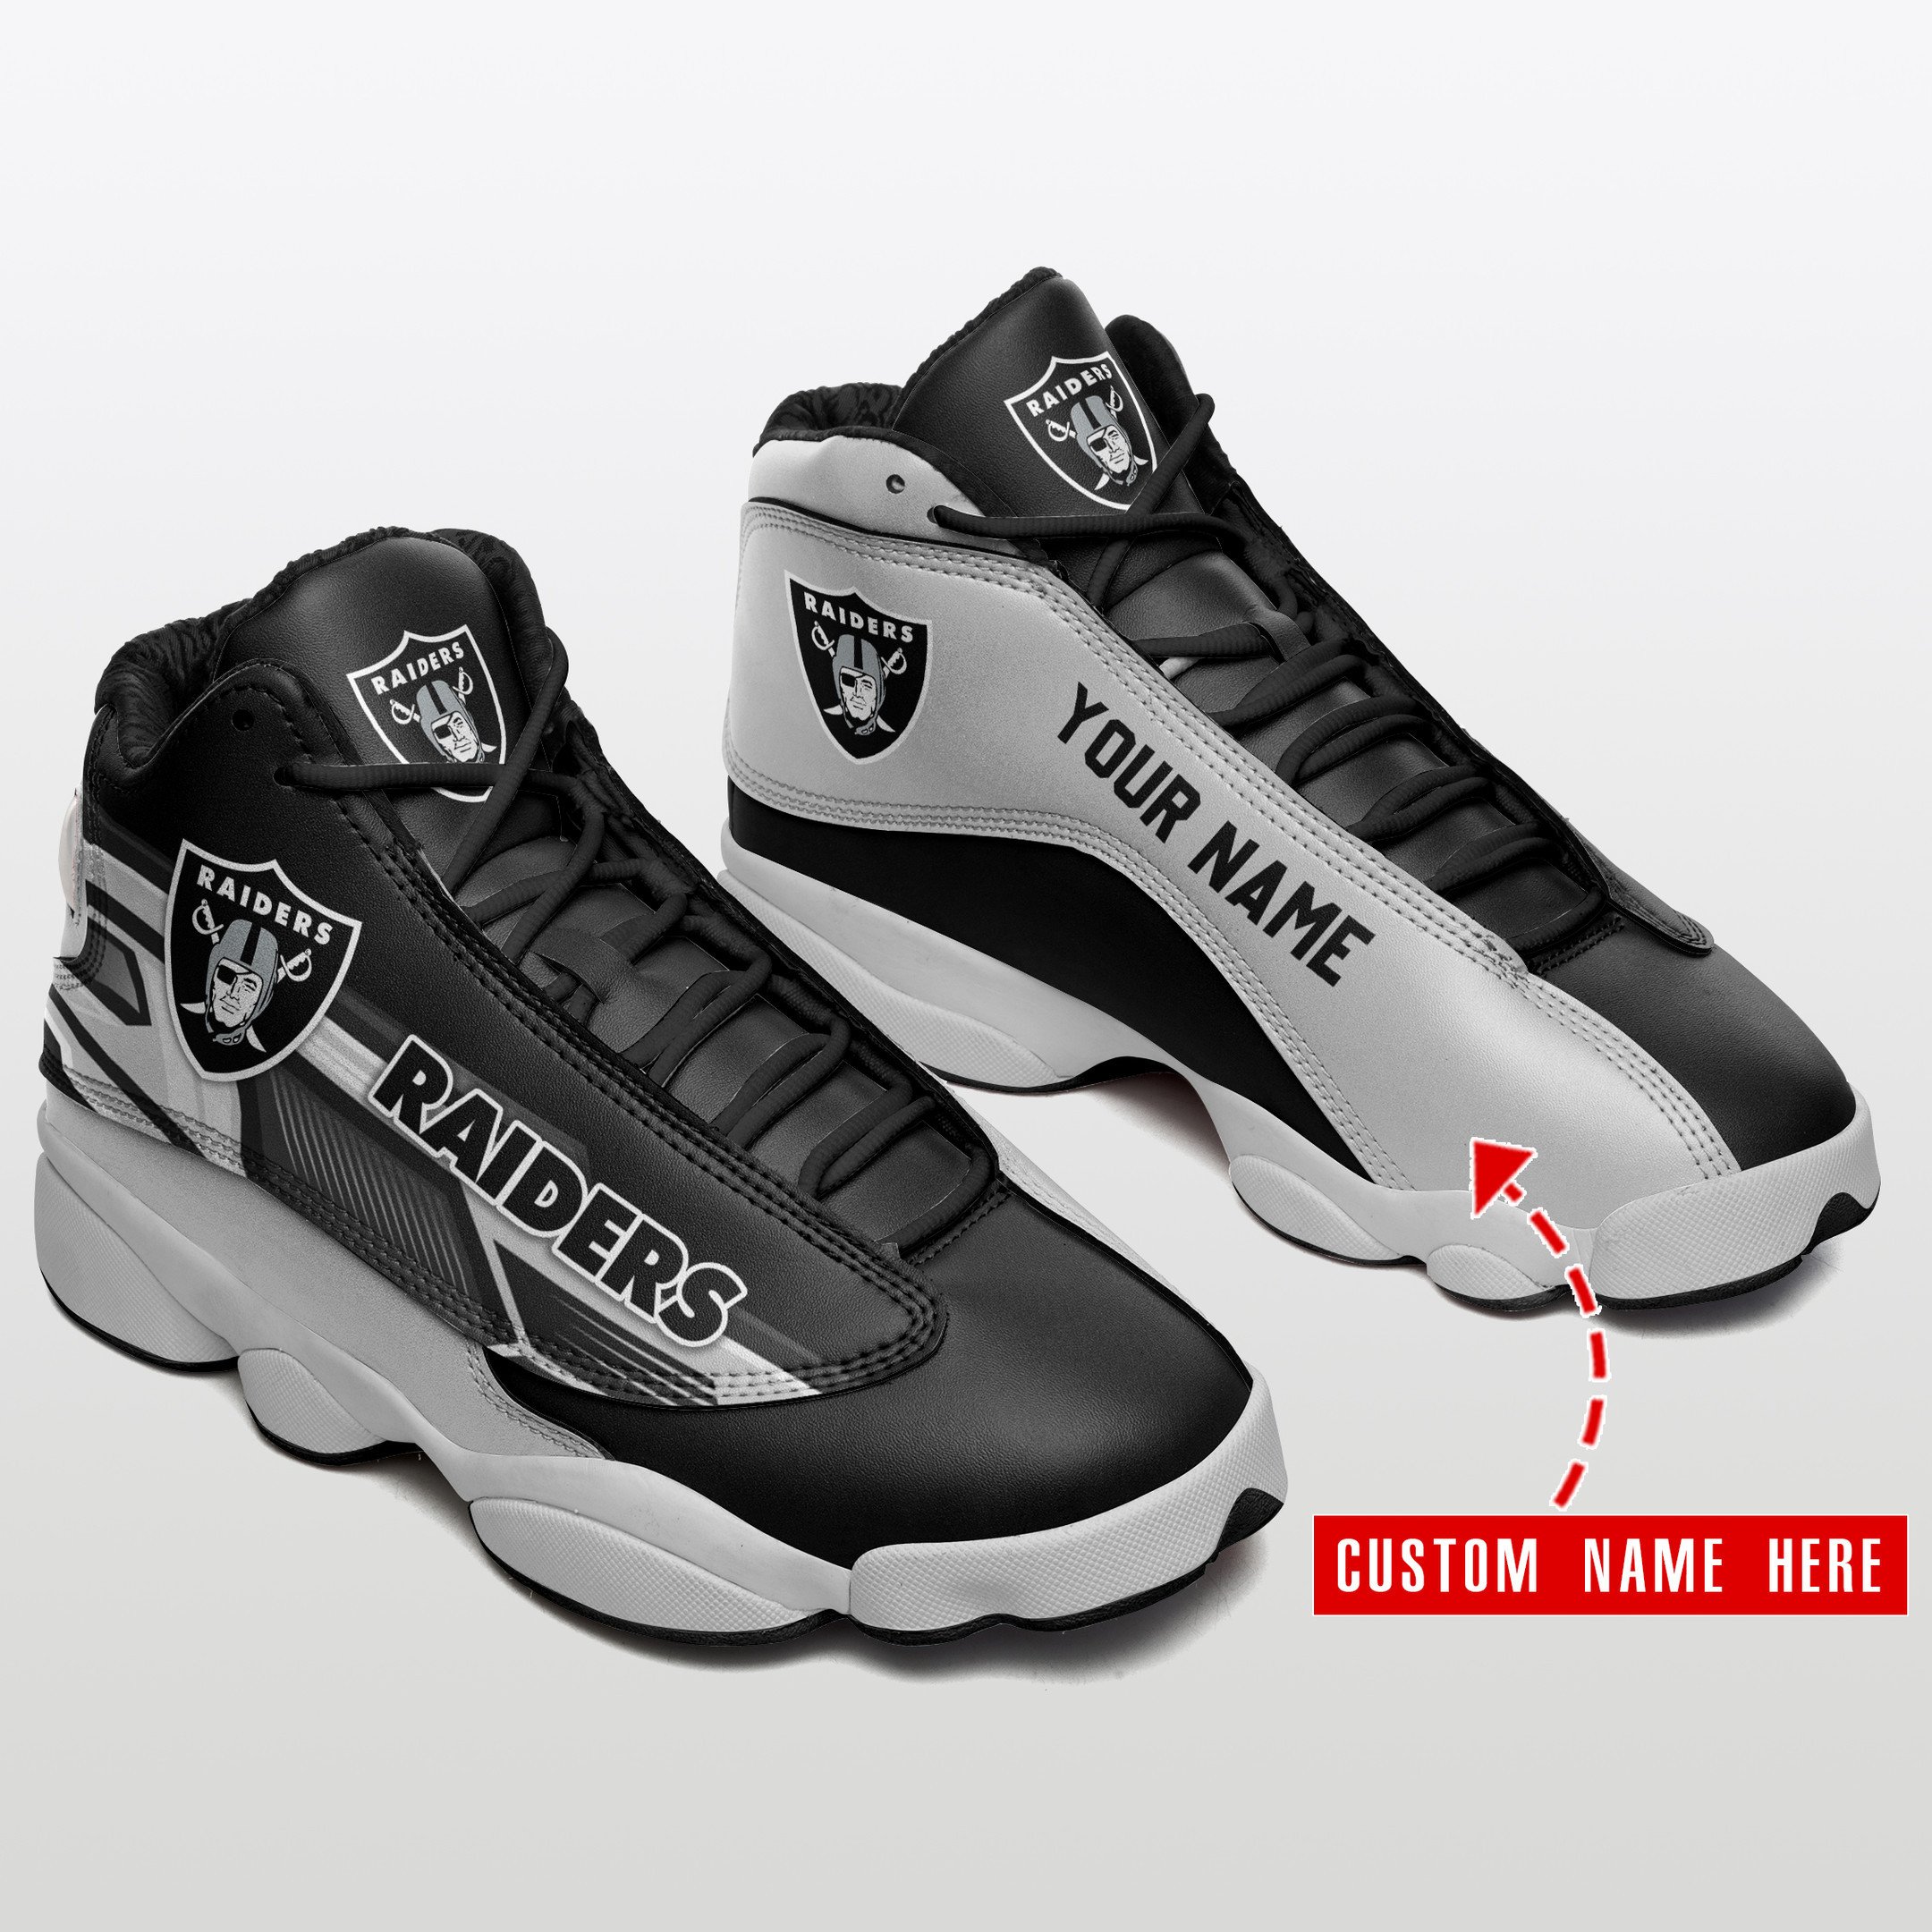 Las Vegas Raiders New Air Jordan 11 Sneakers Shoes